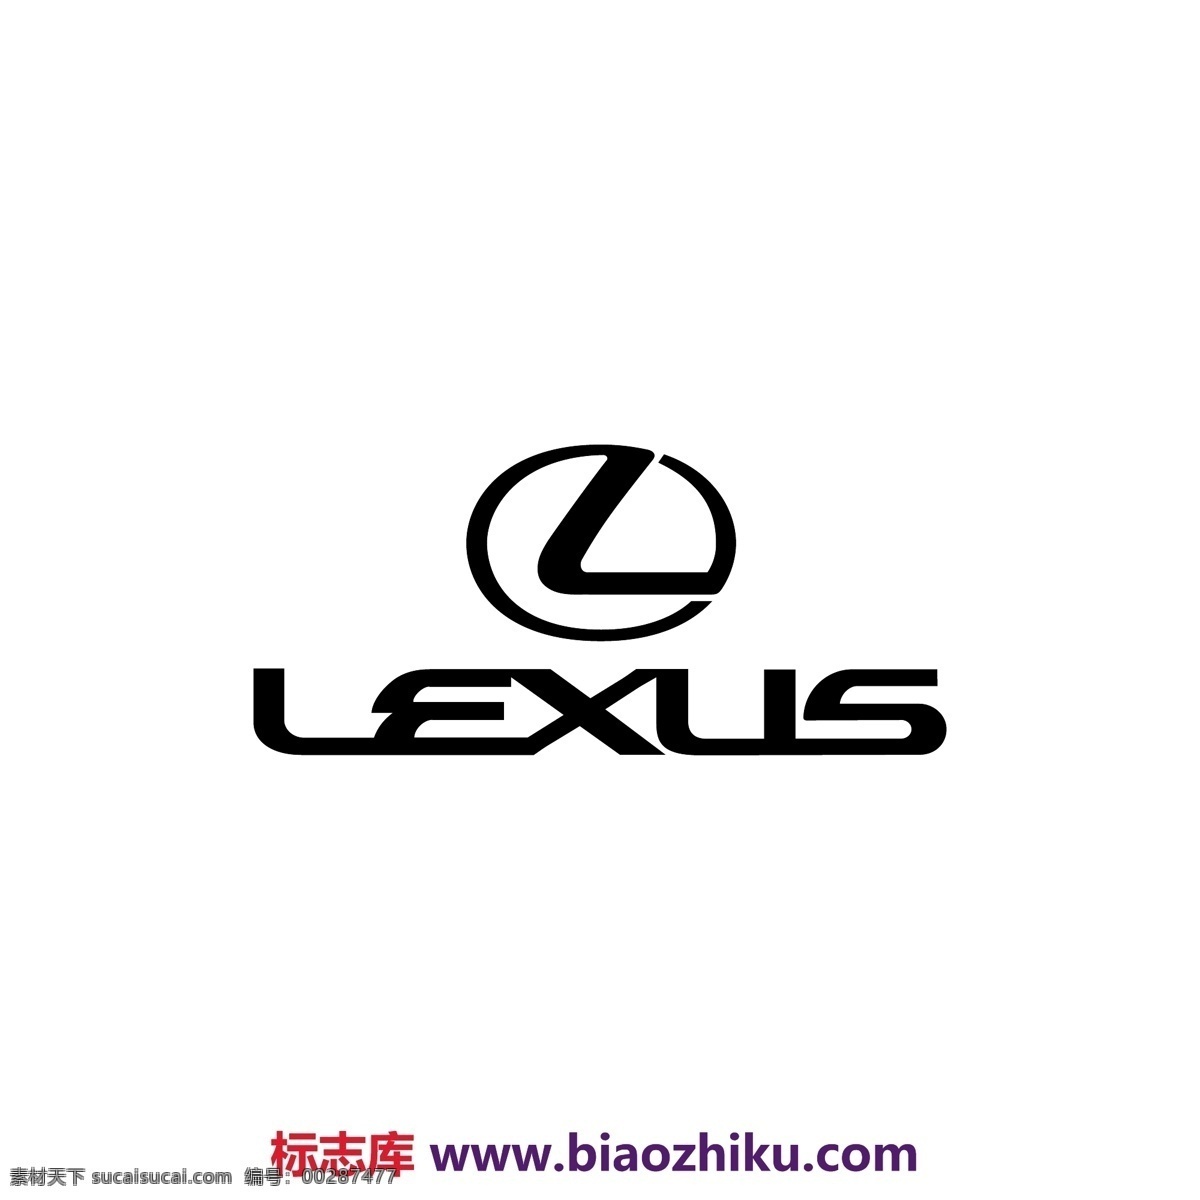 lexus logo大全 logo 设计欣赏 商业矢量 矢量下载 凌志 标志设计 欣赏 网页矢量 矢量图 其他矢量图